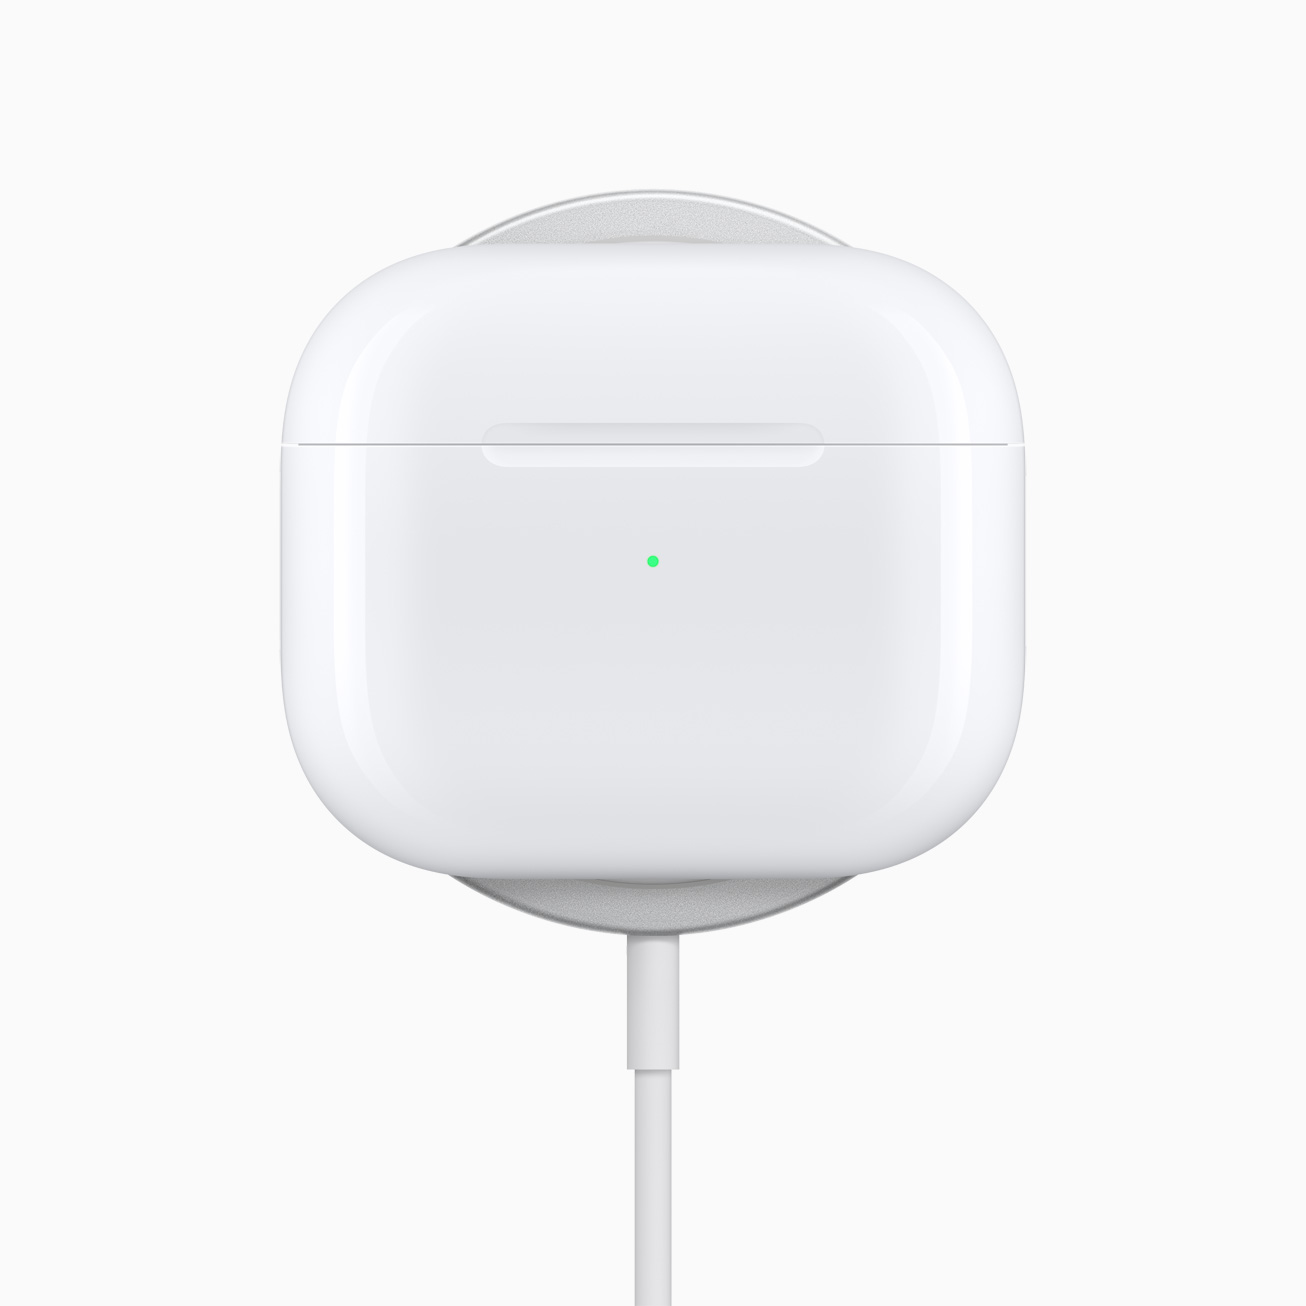 Apple_AirPods-3rd-gen_MagSafe-charging_10182021.jpg